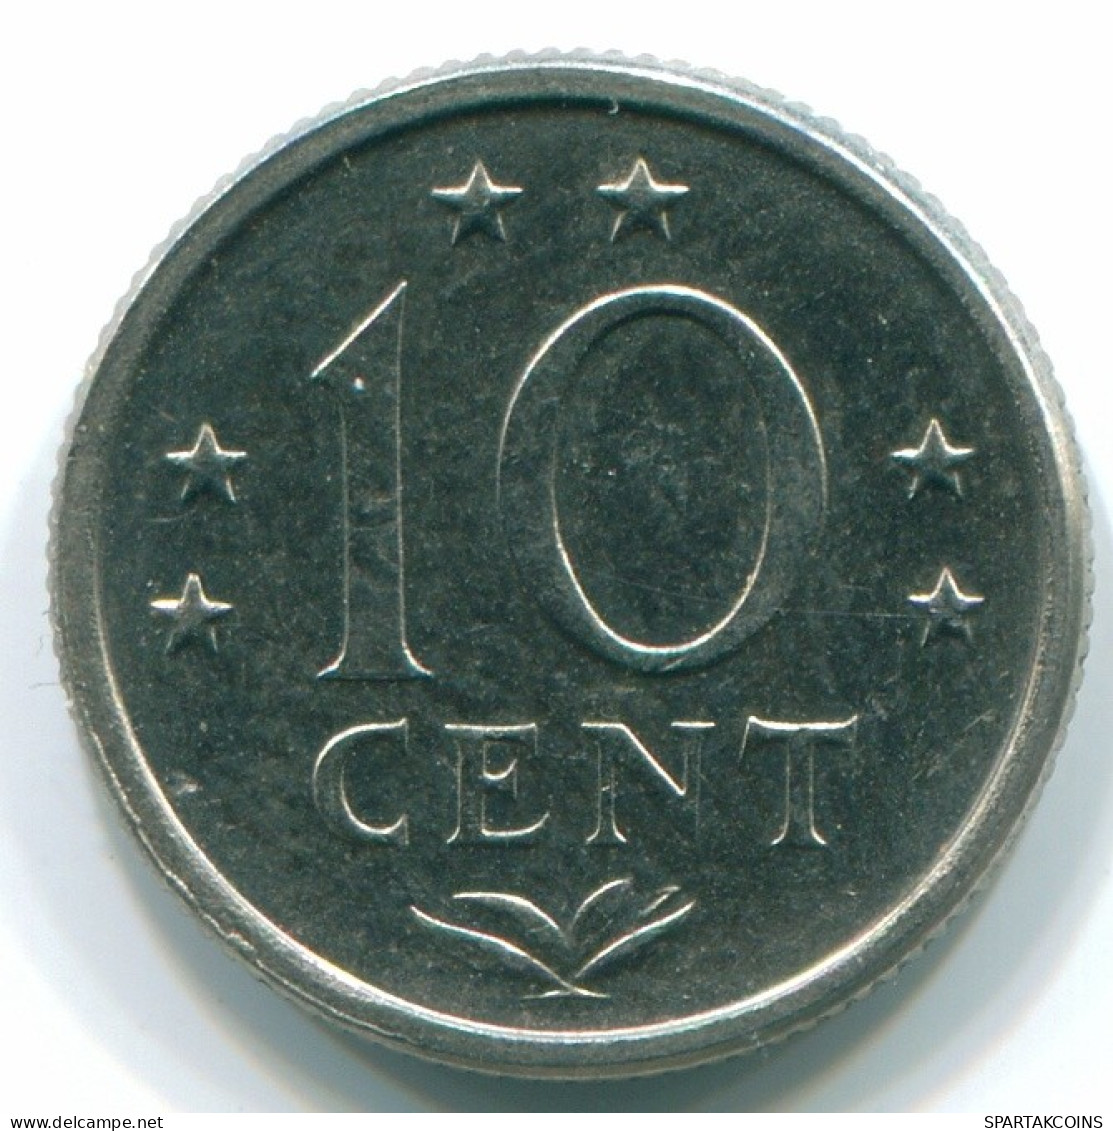 10 CENTS 1971 NETHERLANDS ANTILLES Nickel Colonial Coin #S13395.U.A - Antilles Néerlandaises